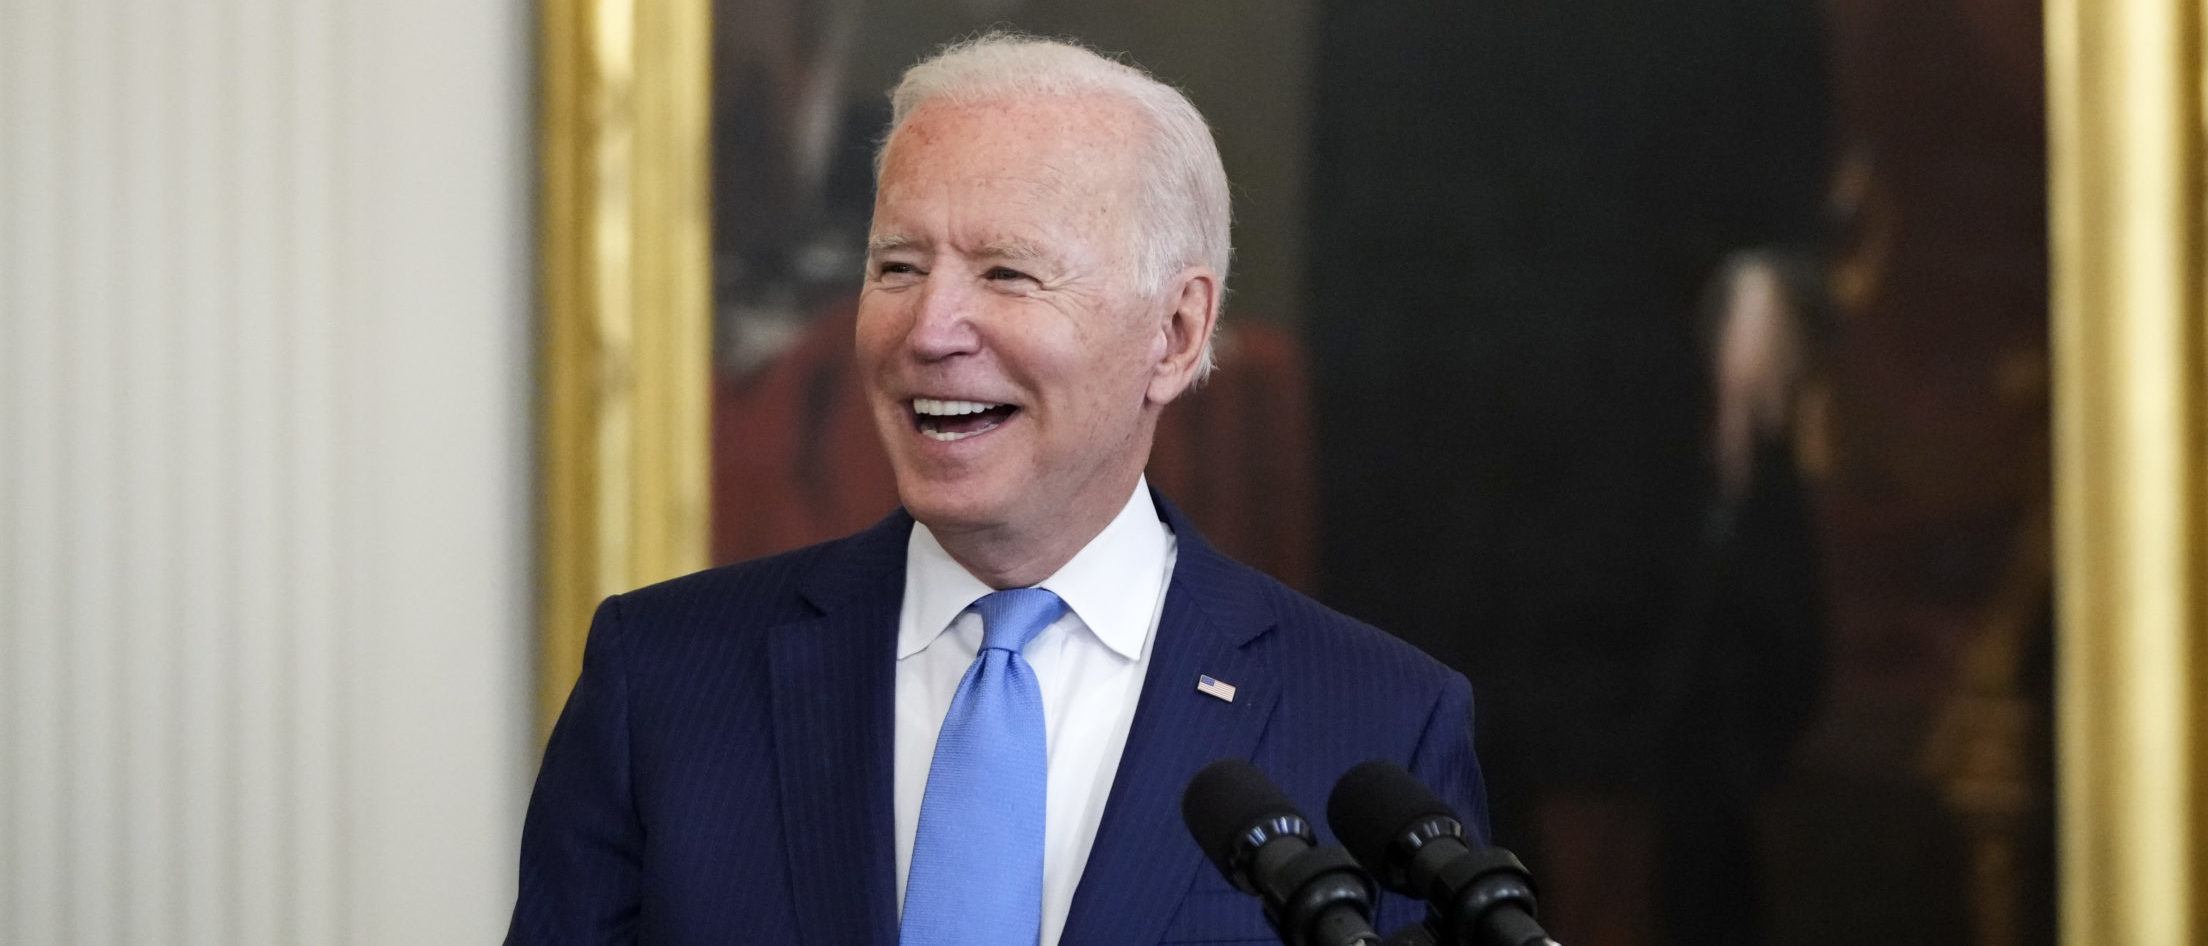 President Joe Biden speaks during an event on Aug. 23 at the White House. (Drew Angerer/Getty Images)